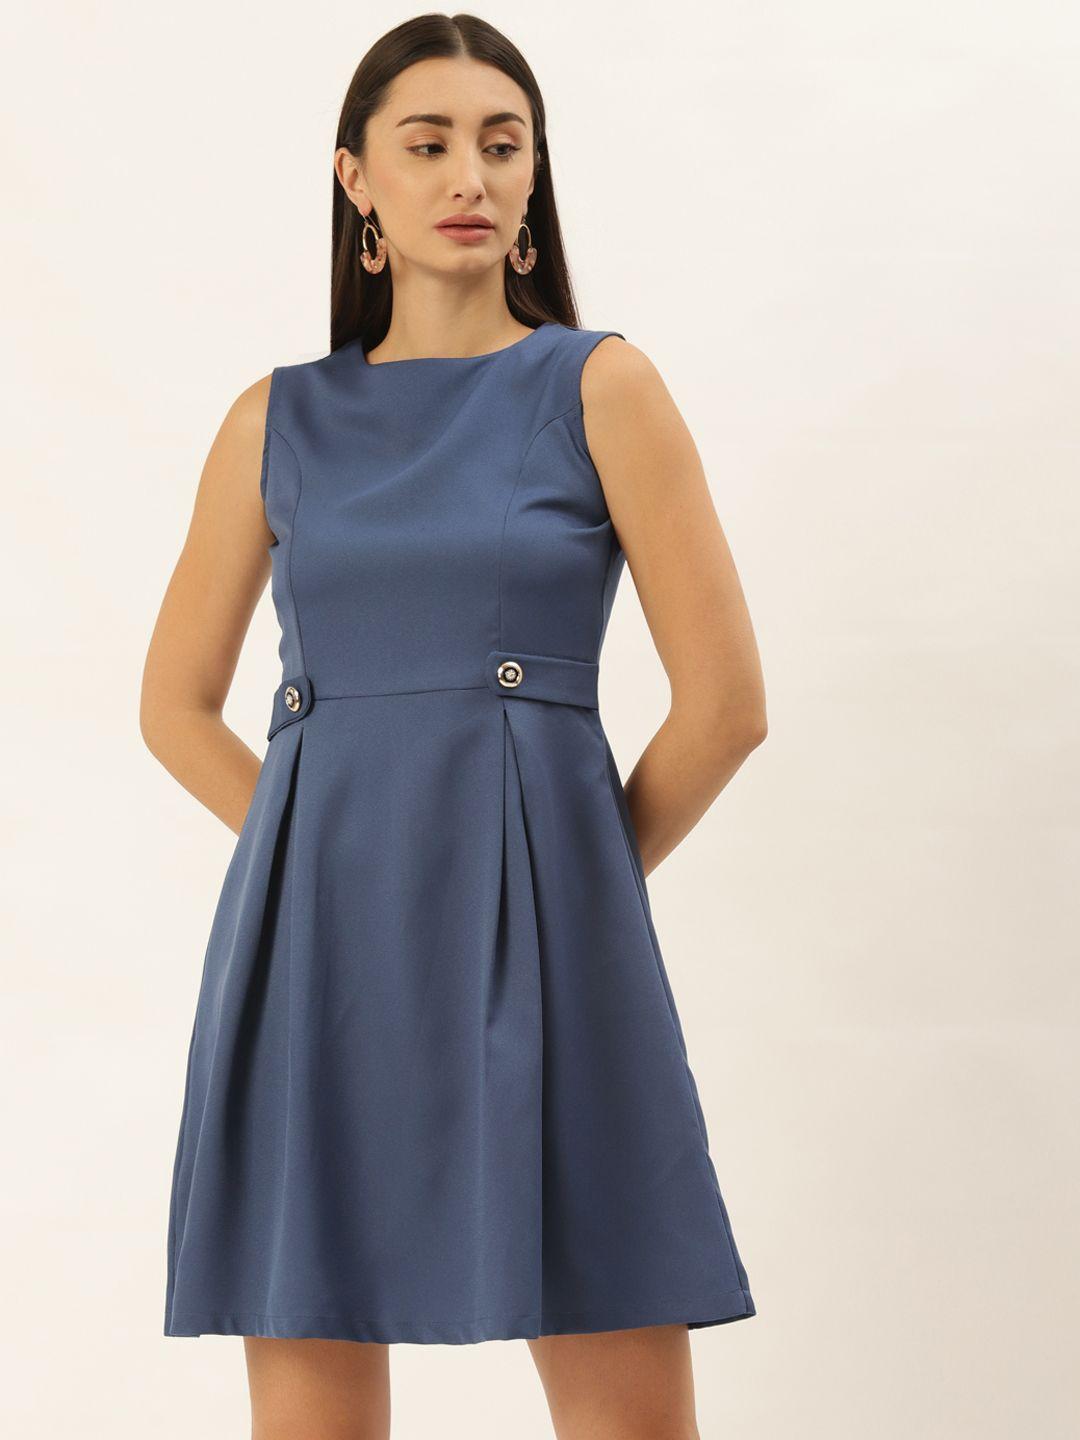 hill street blue crepe dress